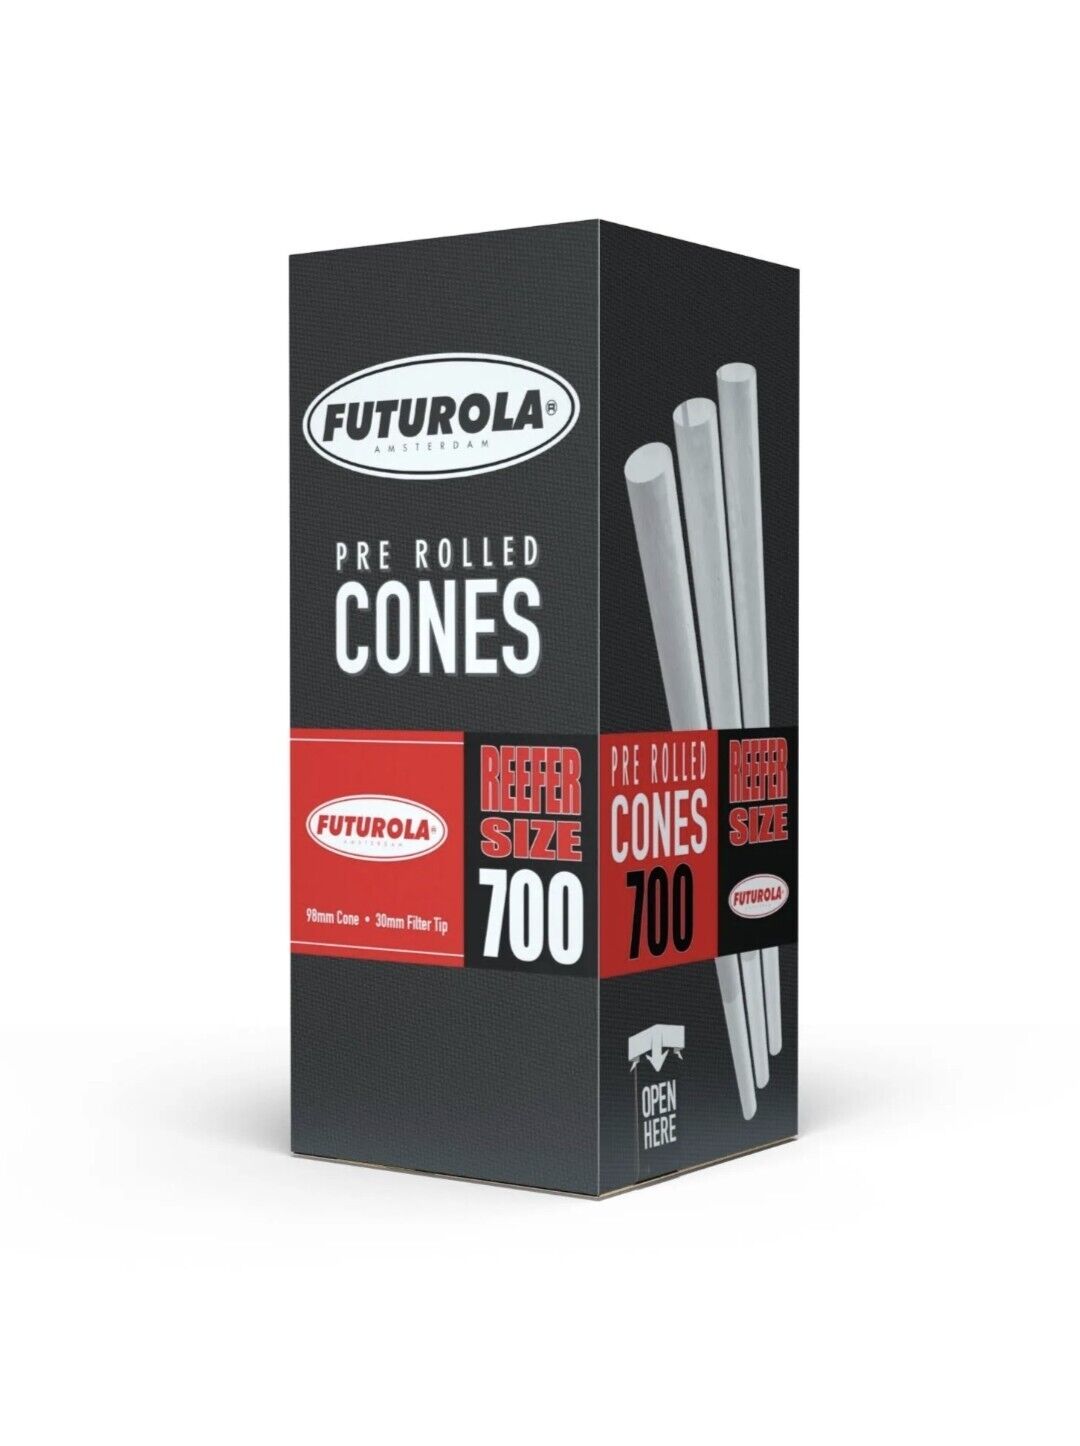 Futurola Pre Rolled Cones 700 